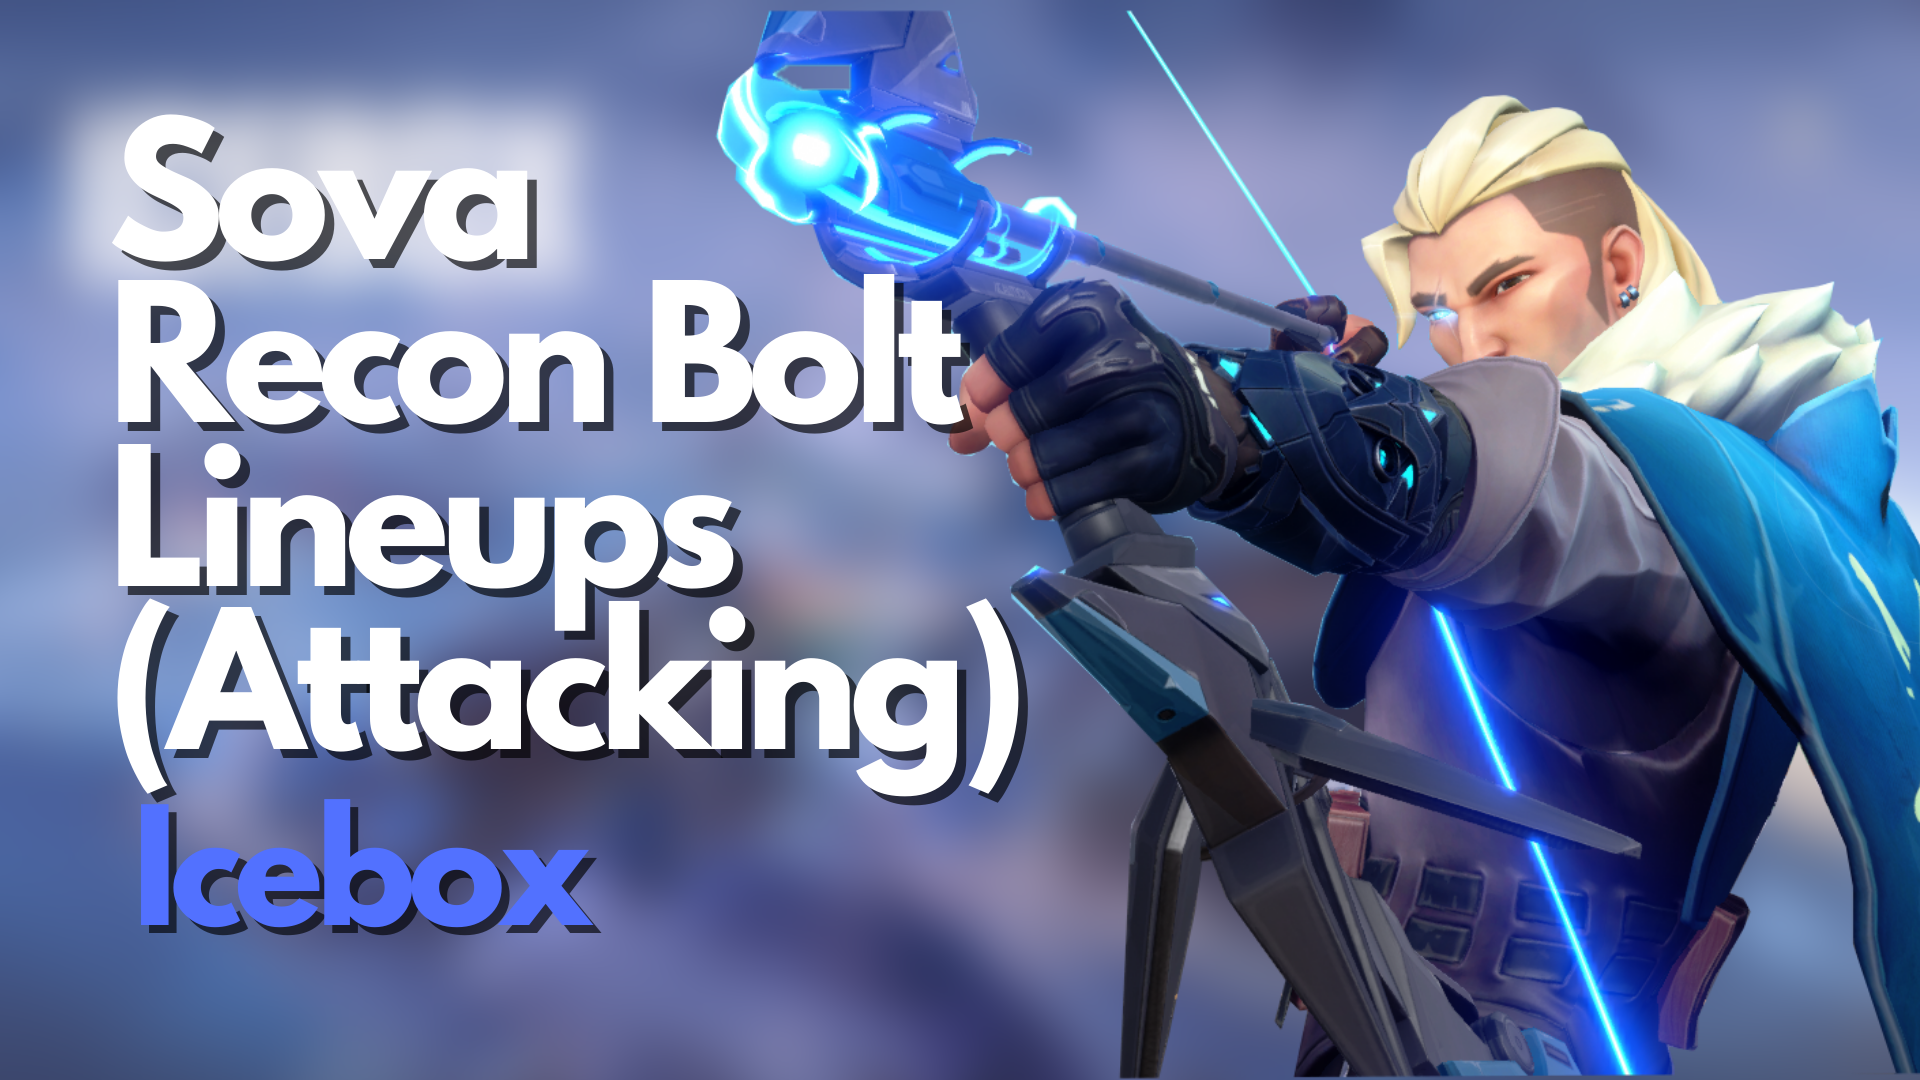 VALORANT: Sova Recon Bolt Lineups for Icebox (Attacking)